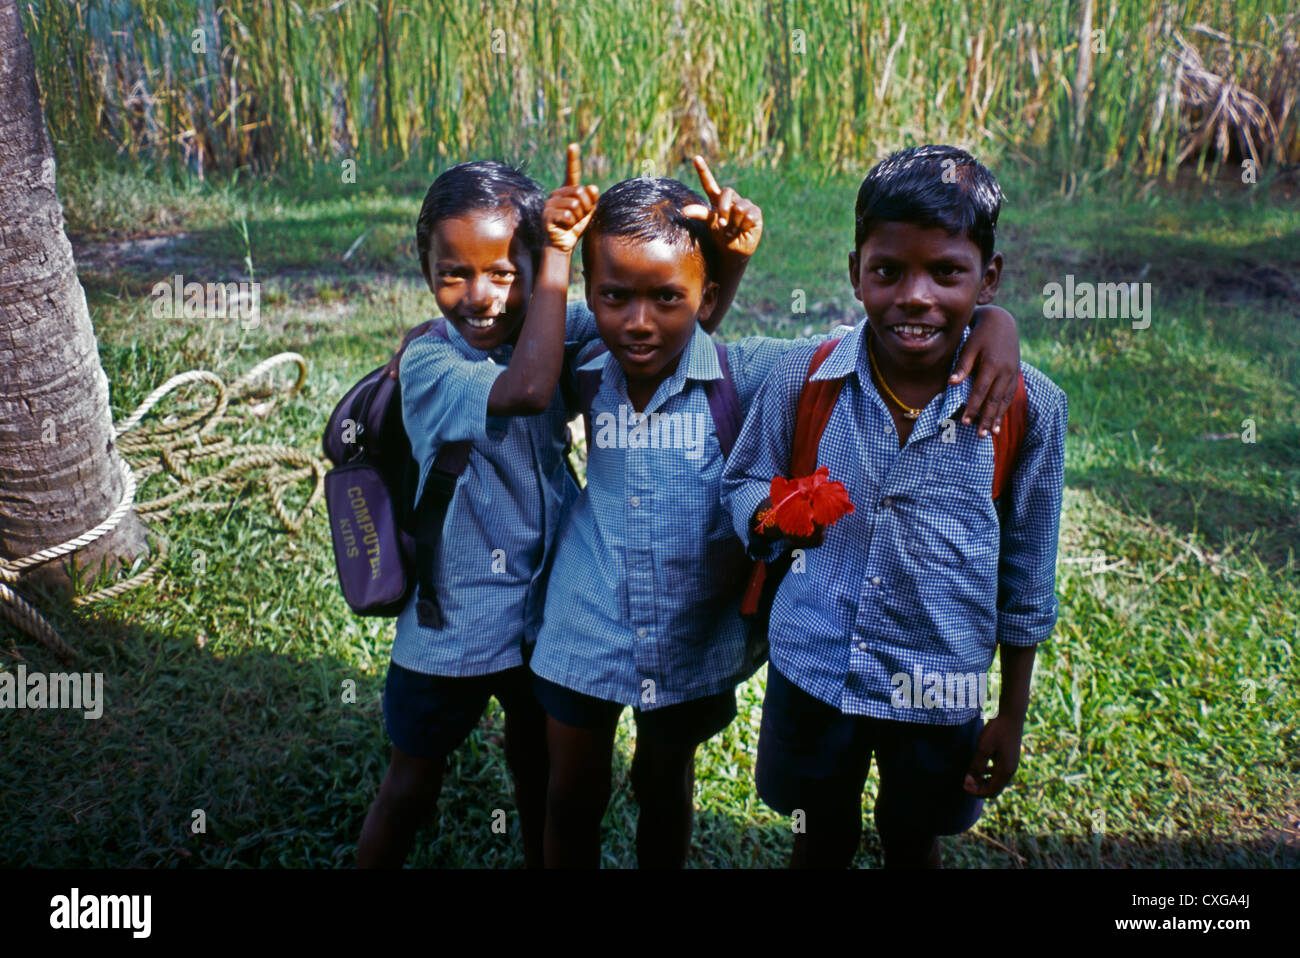 Kerala India Backwaters School Boys In Uniform One Boy Holding Flower Stock Photo